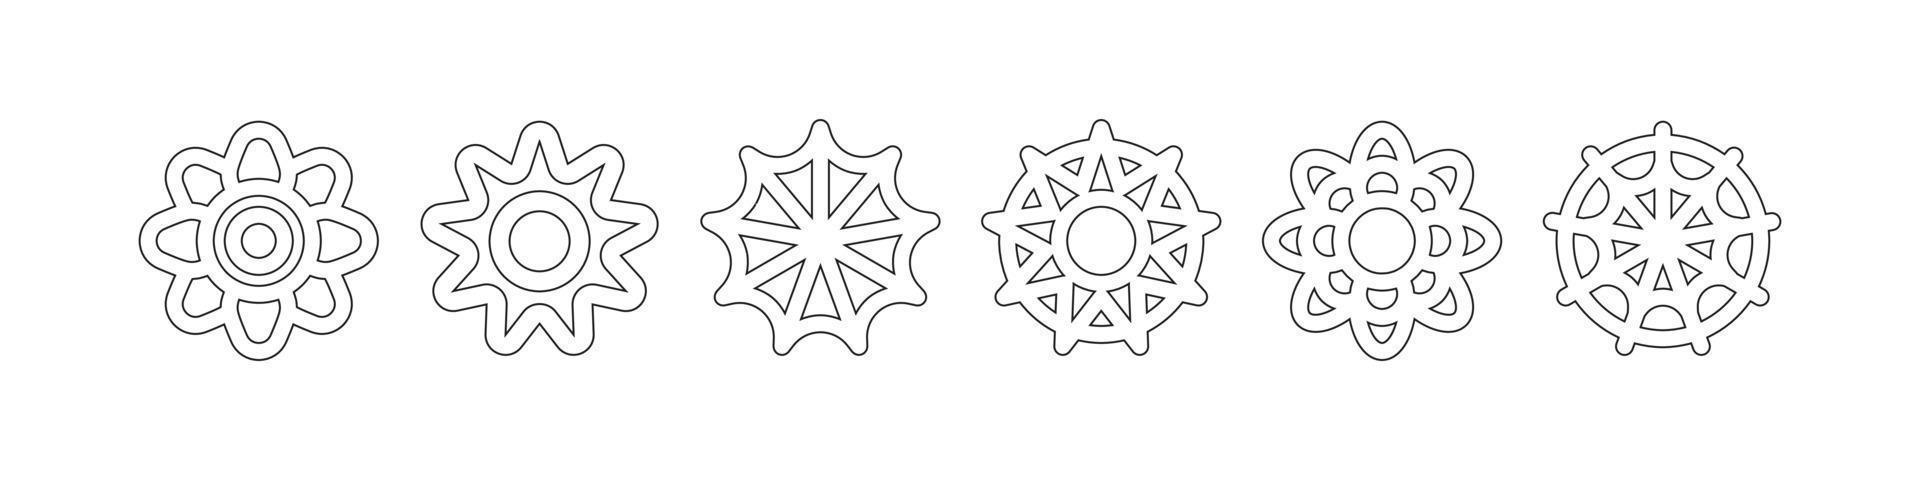 blomma ikon geometri form vektor konst isolerat på vit bakgrund fri ladda ner